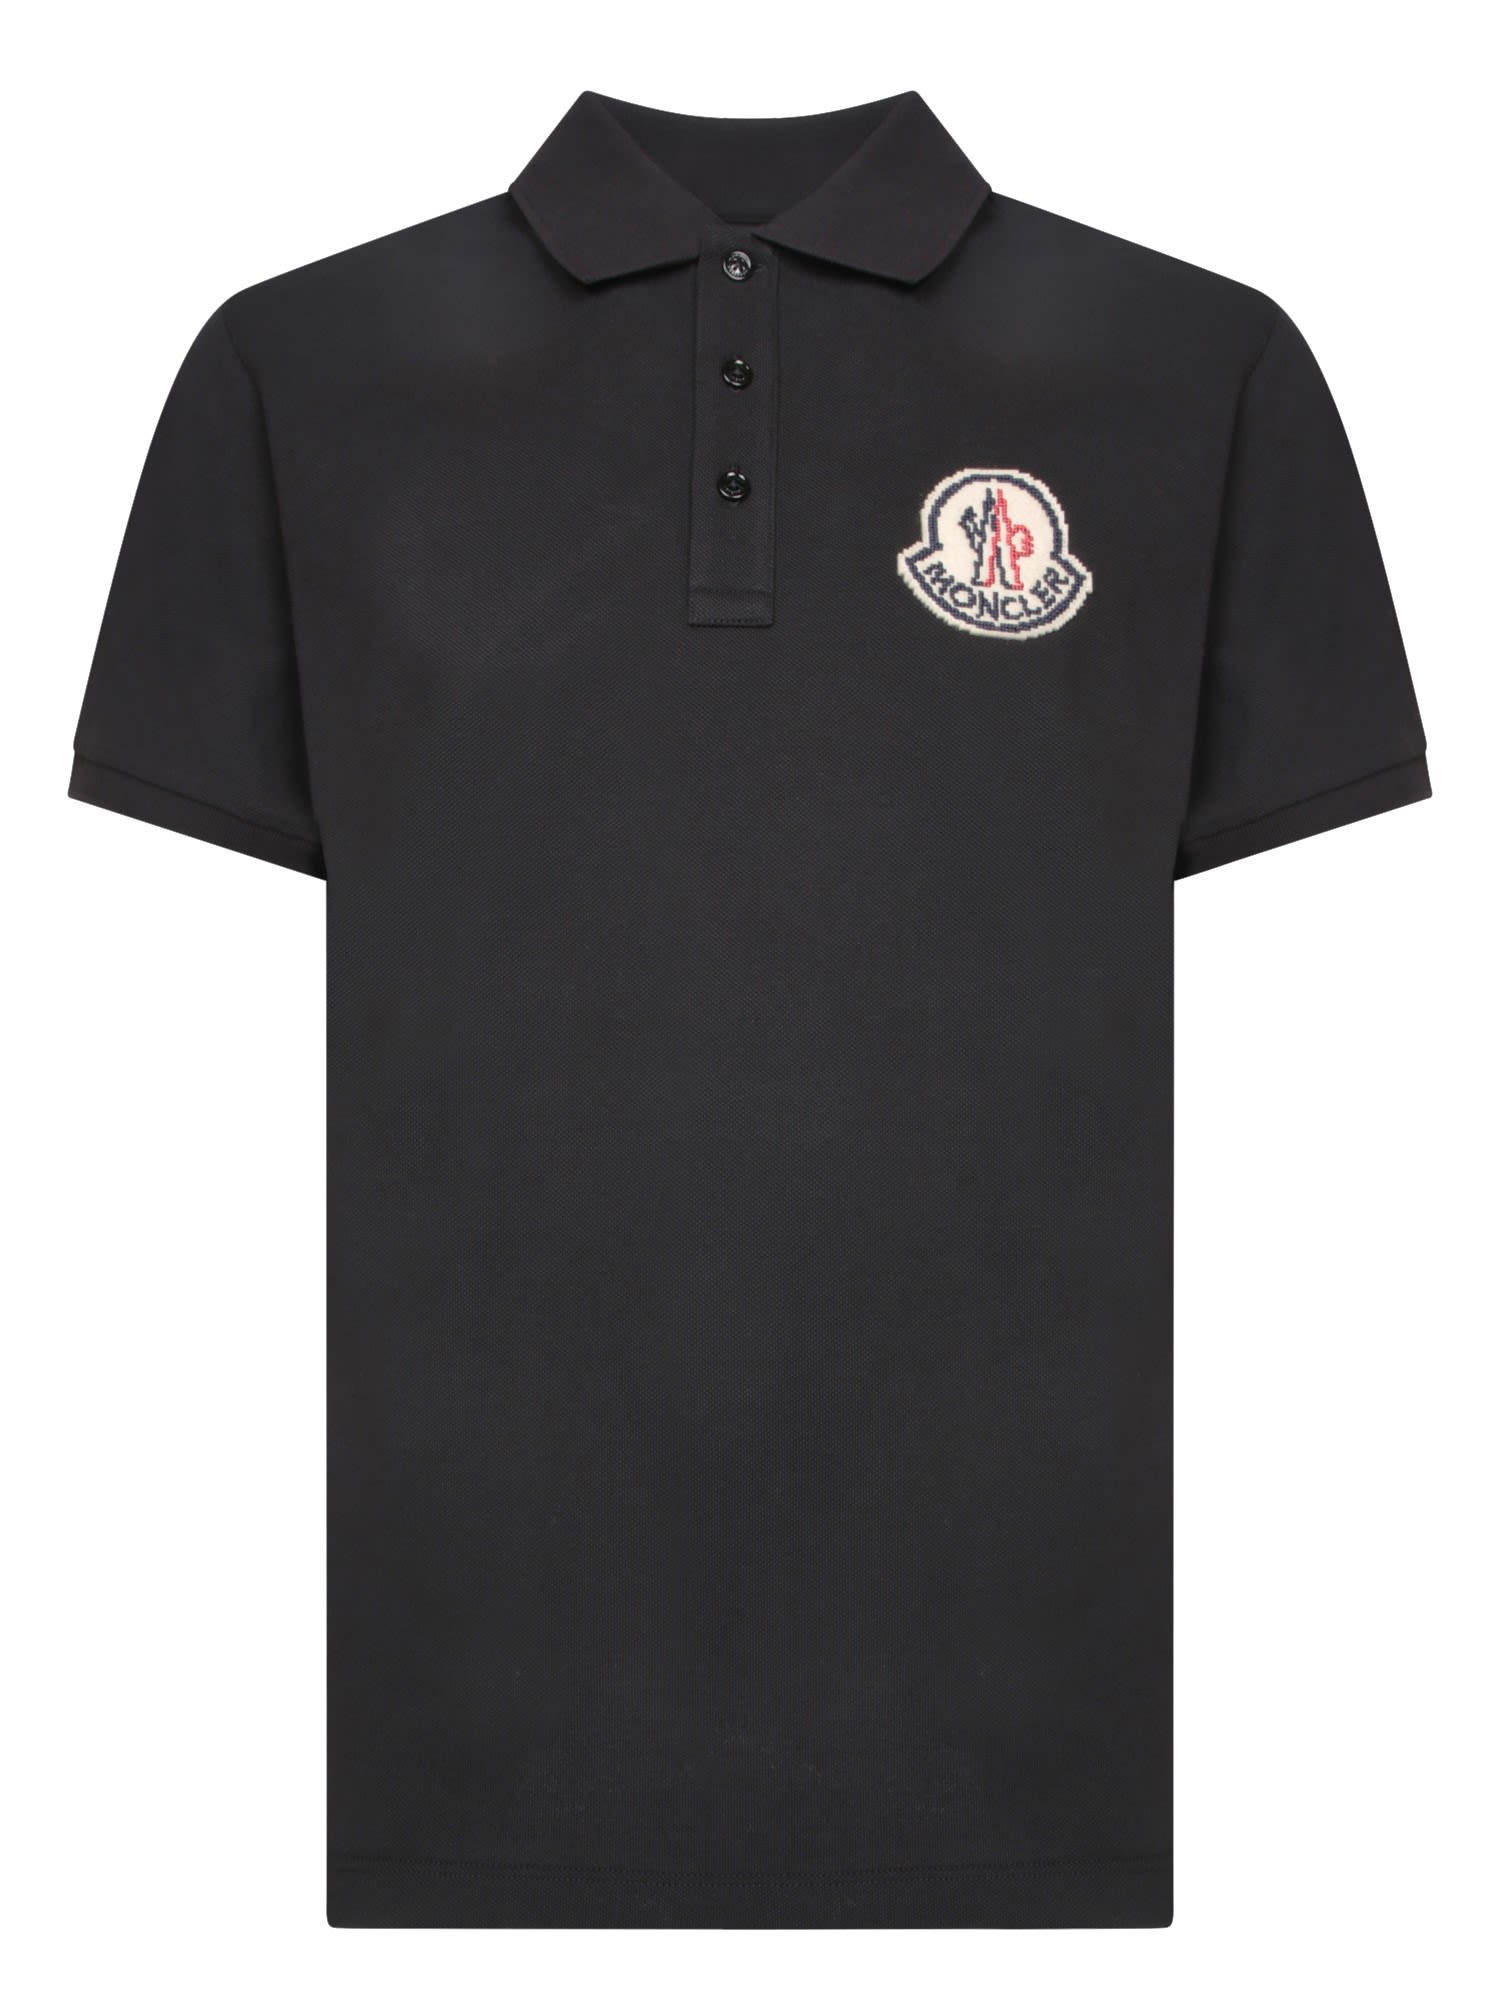 Black Logoed Polo Shirt